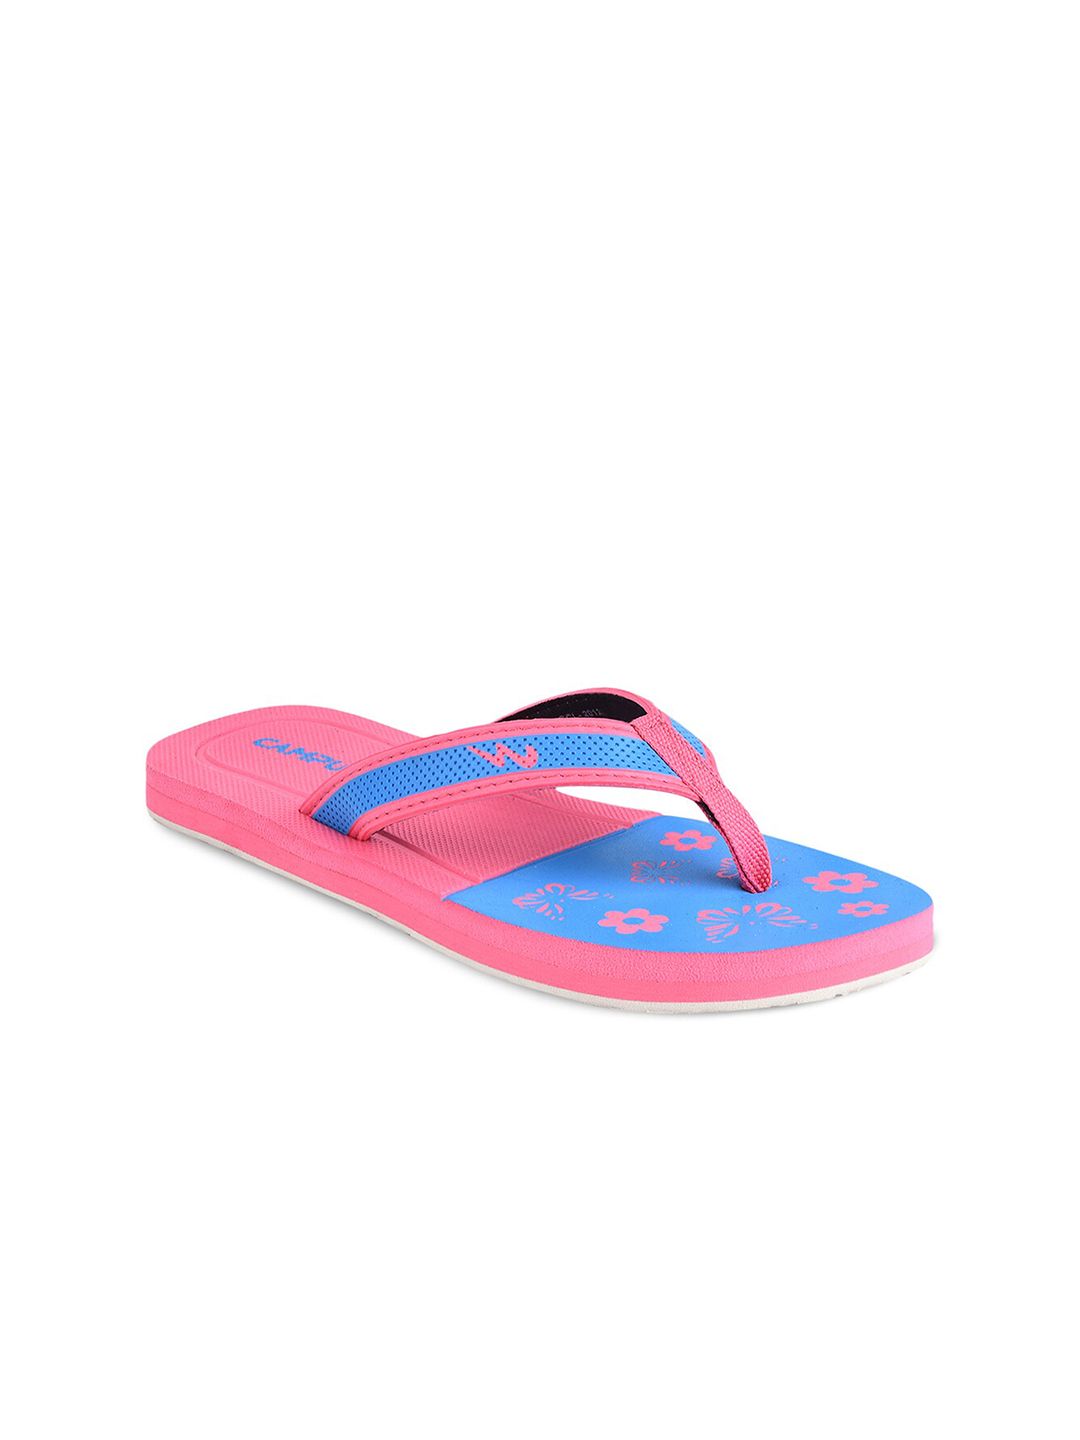 Campus Women Pink & Blue Printed Slip-On Flip Flops Price in India